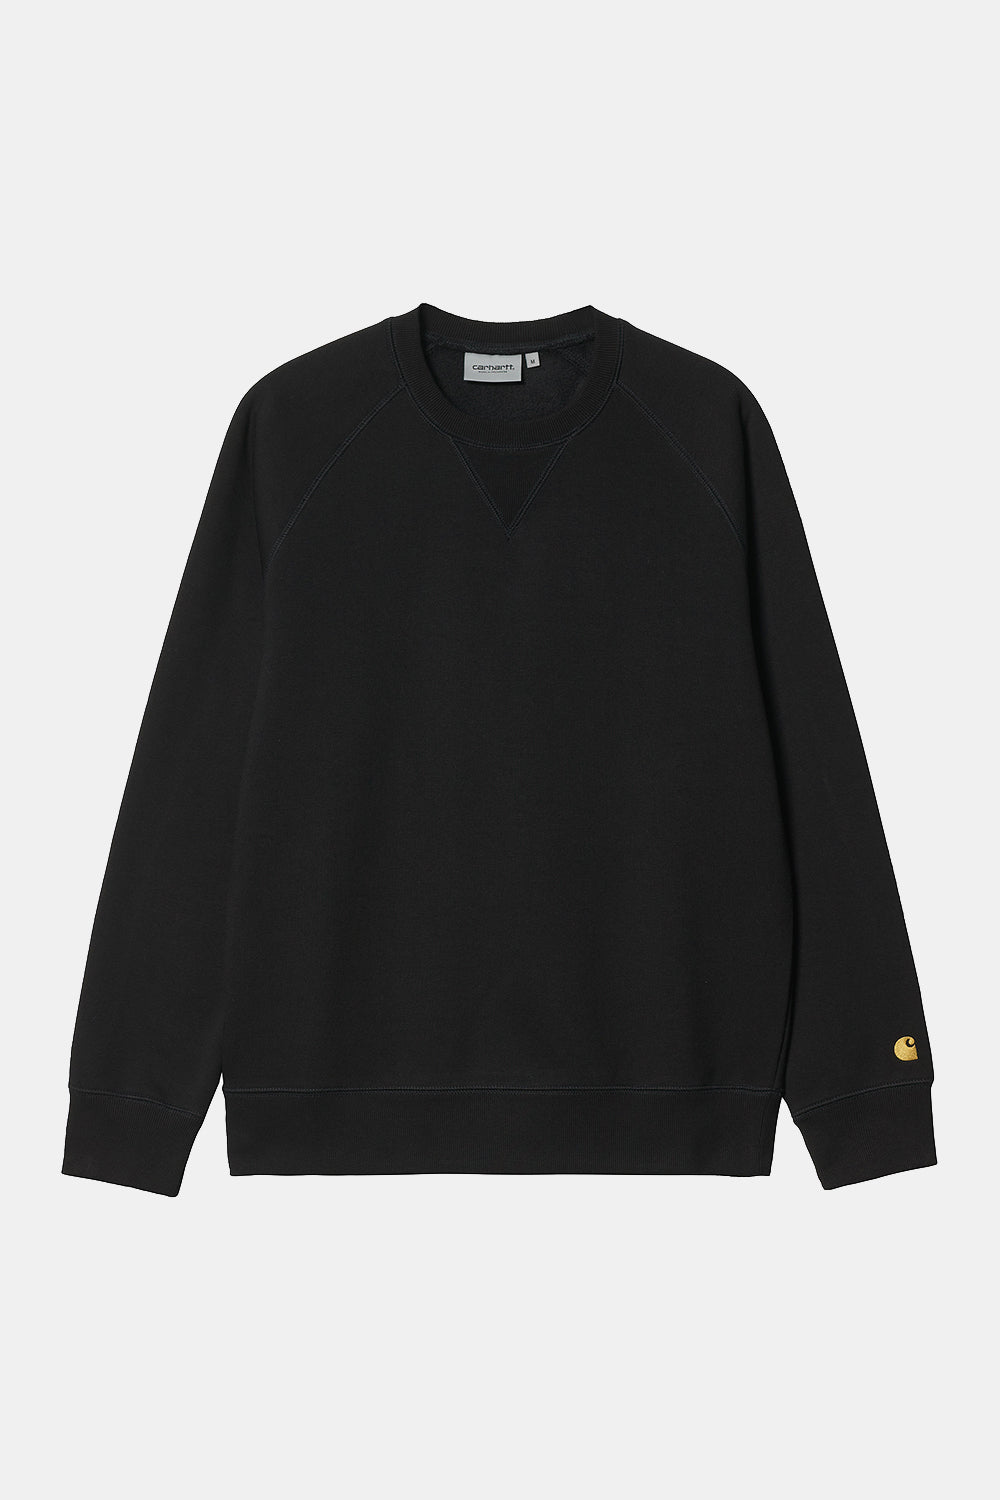 Carhartt WIP Chase Heavy Sweatshirt (Black &amp; Gold) Front